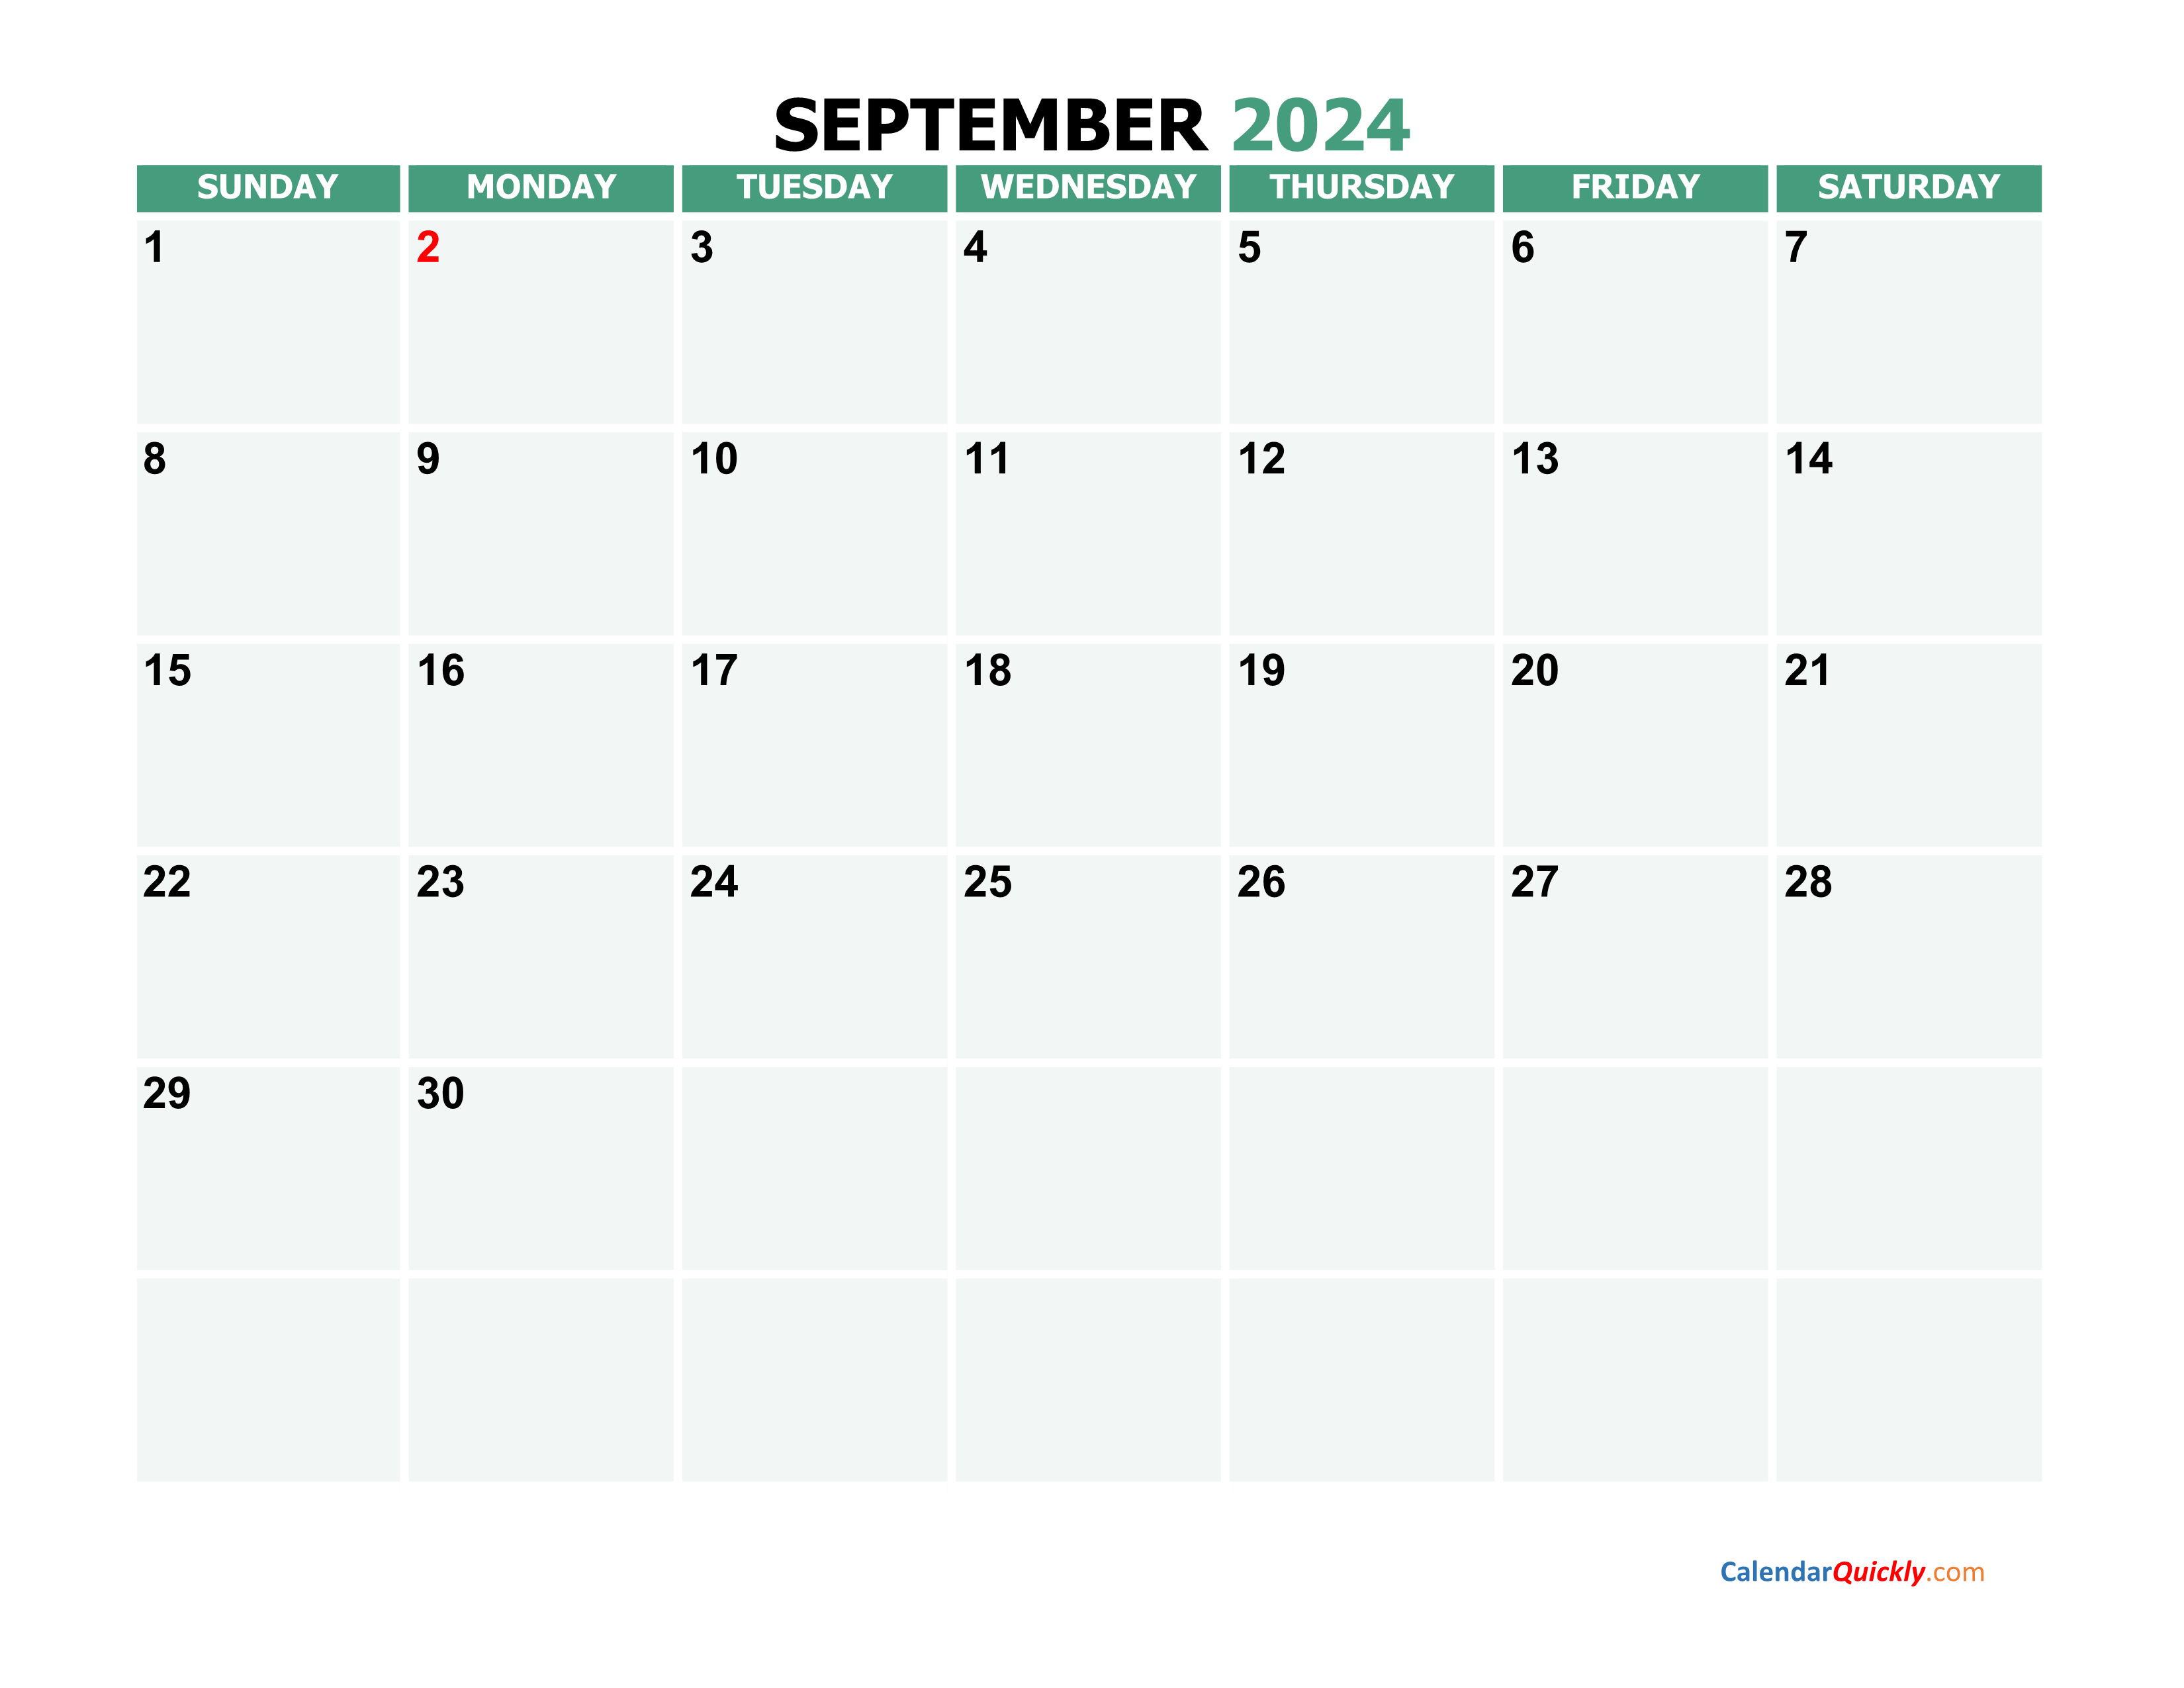 Calendar September 2024 Printable Free Calendar 2024 All Holidays - Free Printable Blank Calendar September 2024